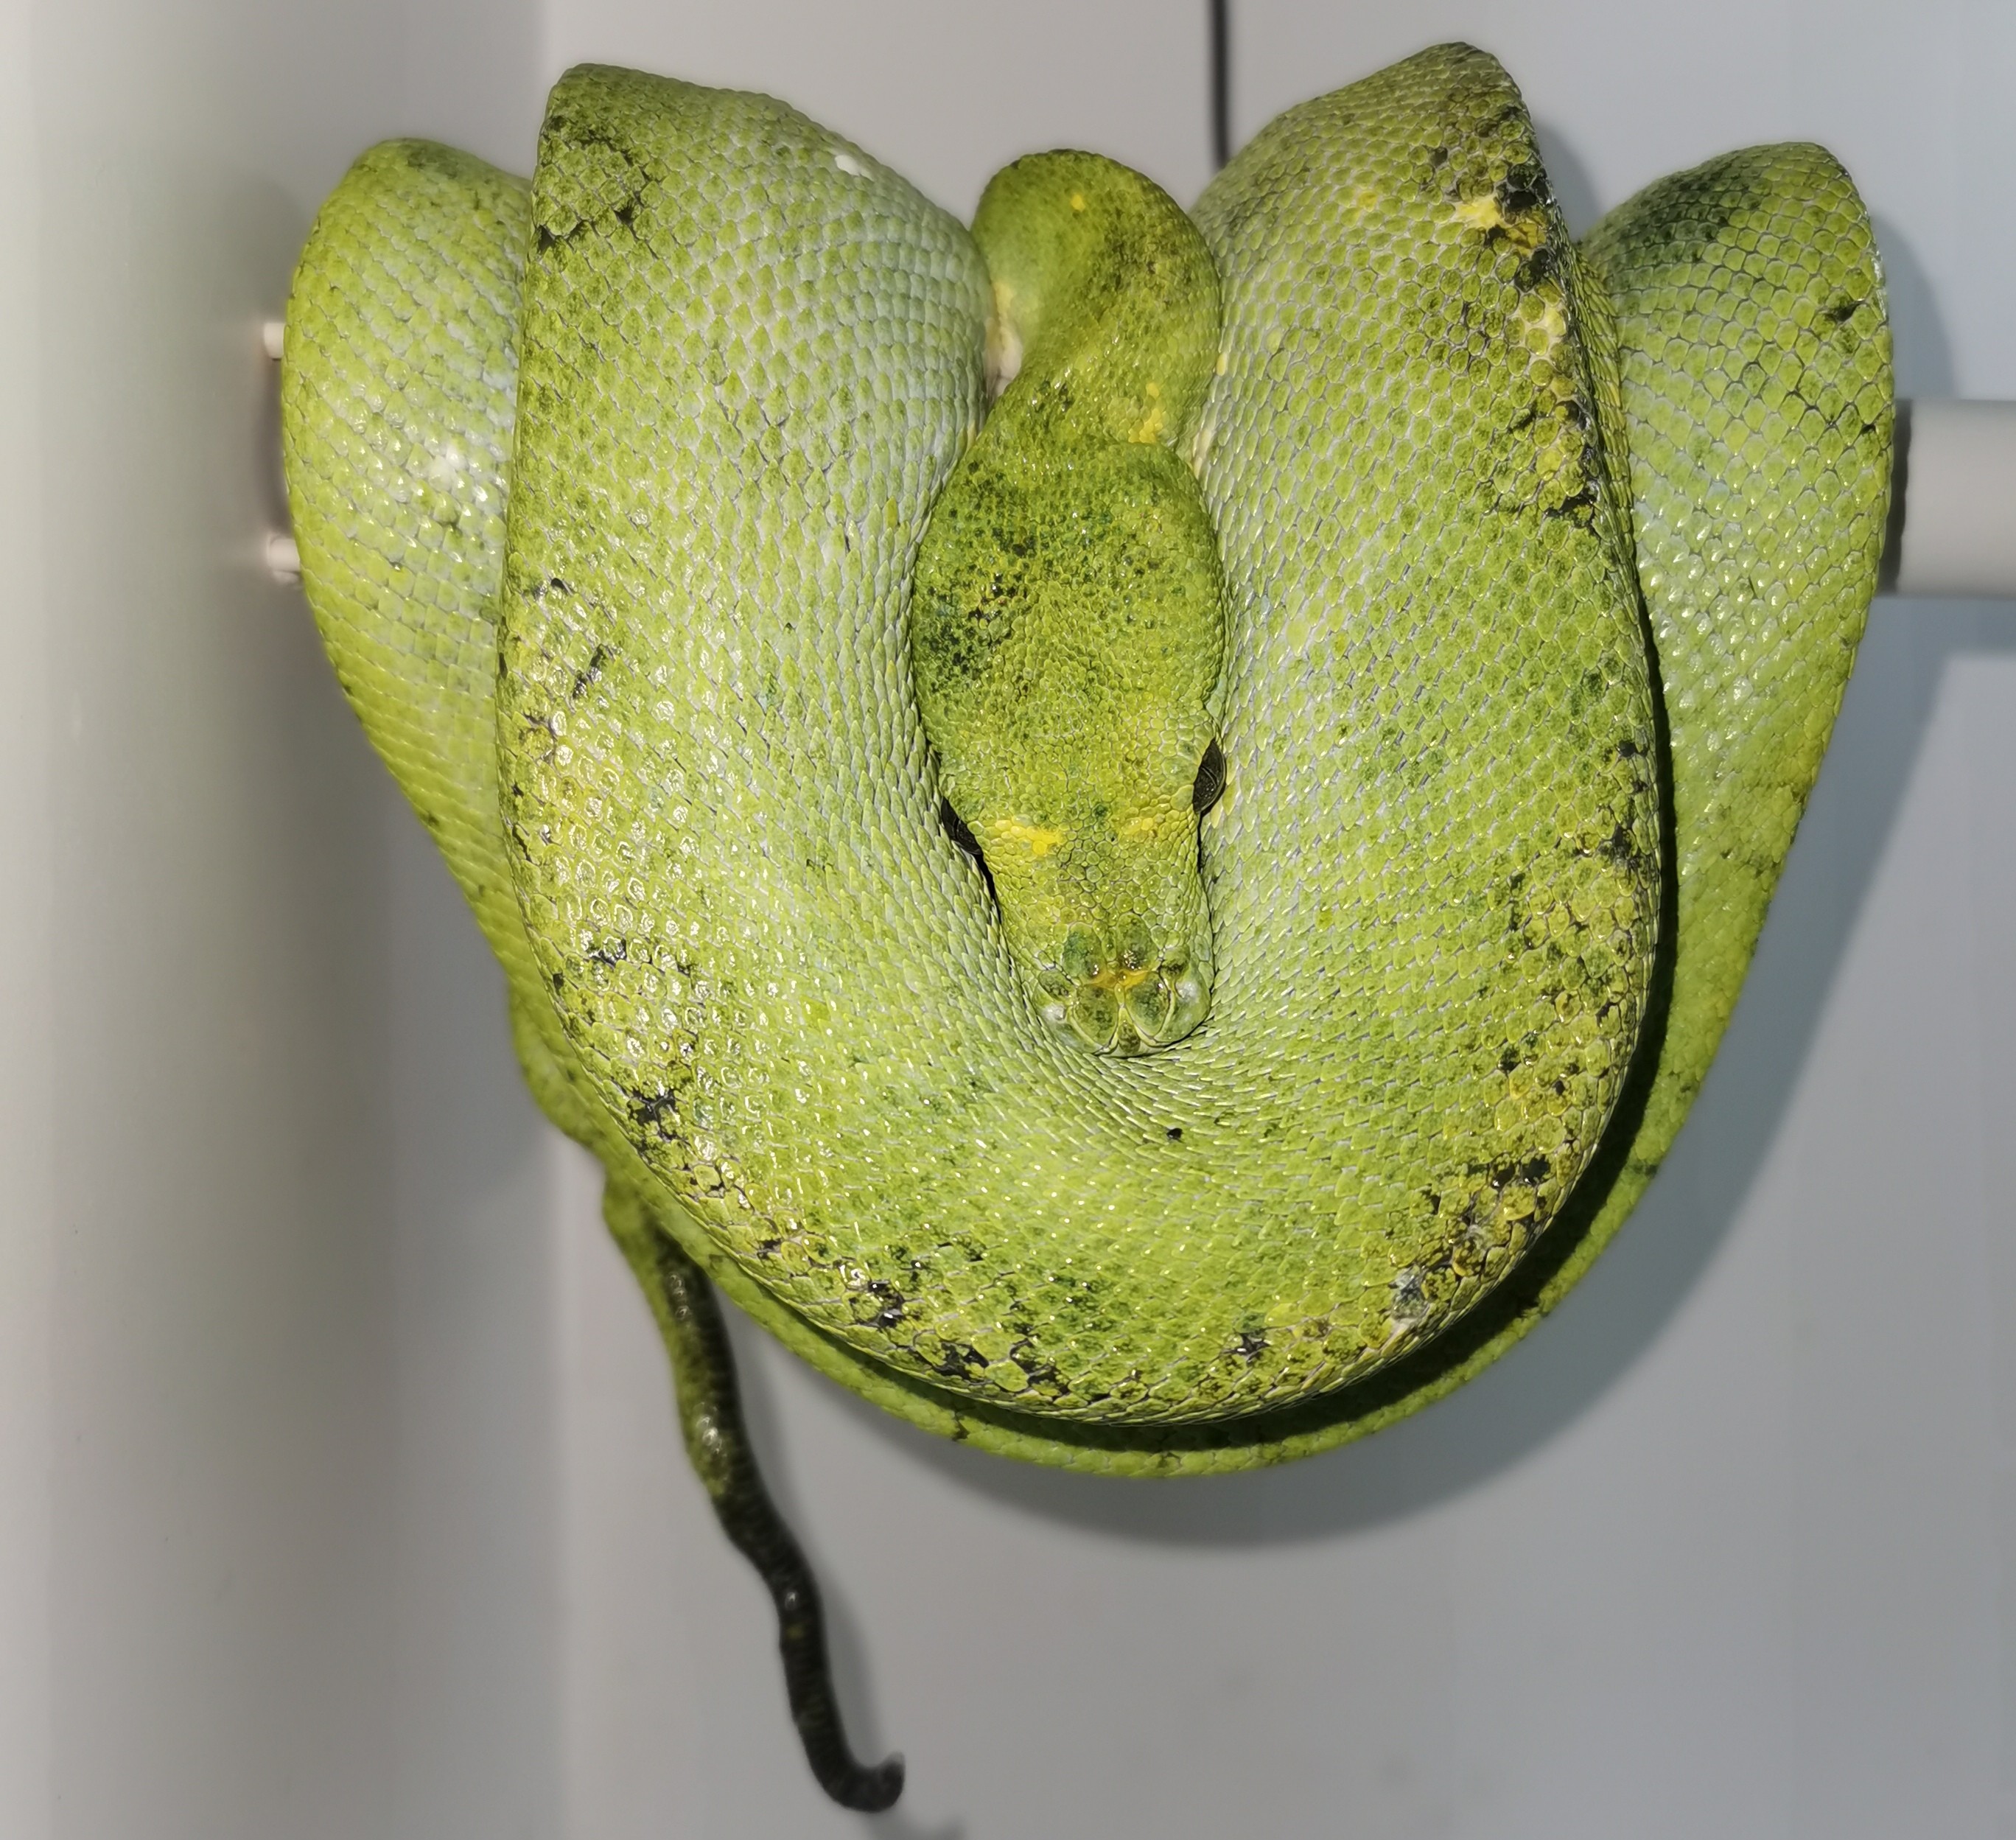 Biak Green Tree Python by Kenai's Snakes